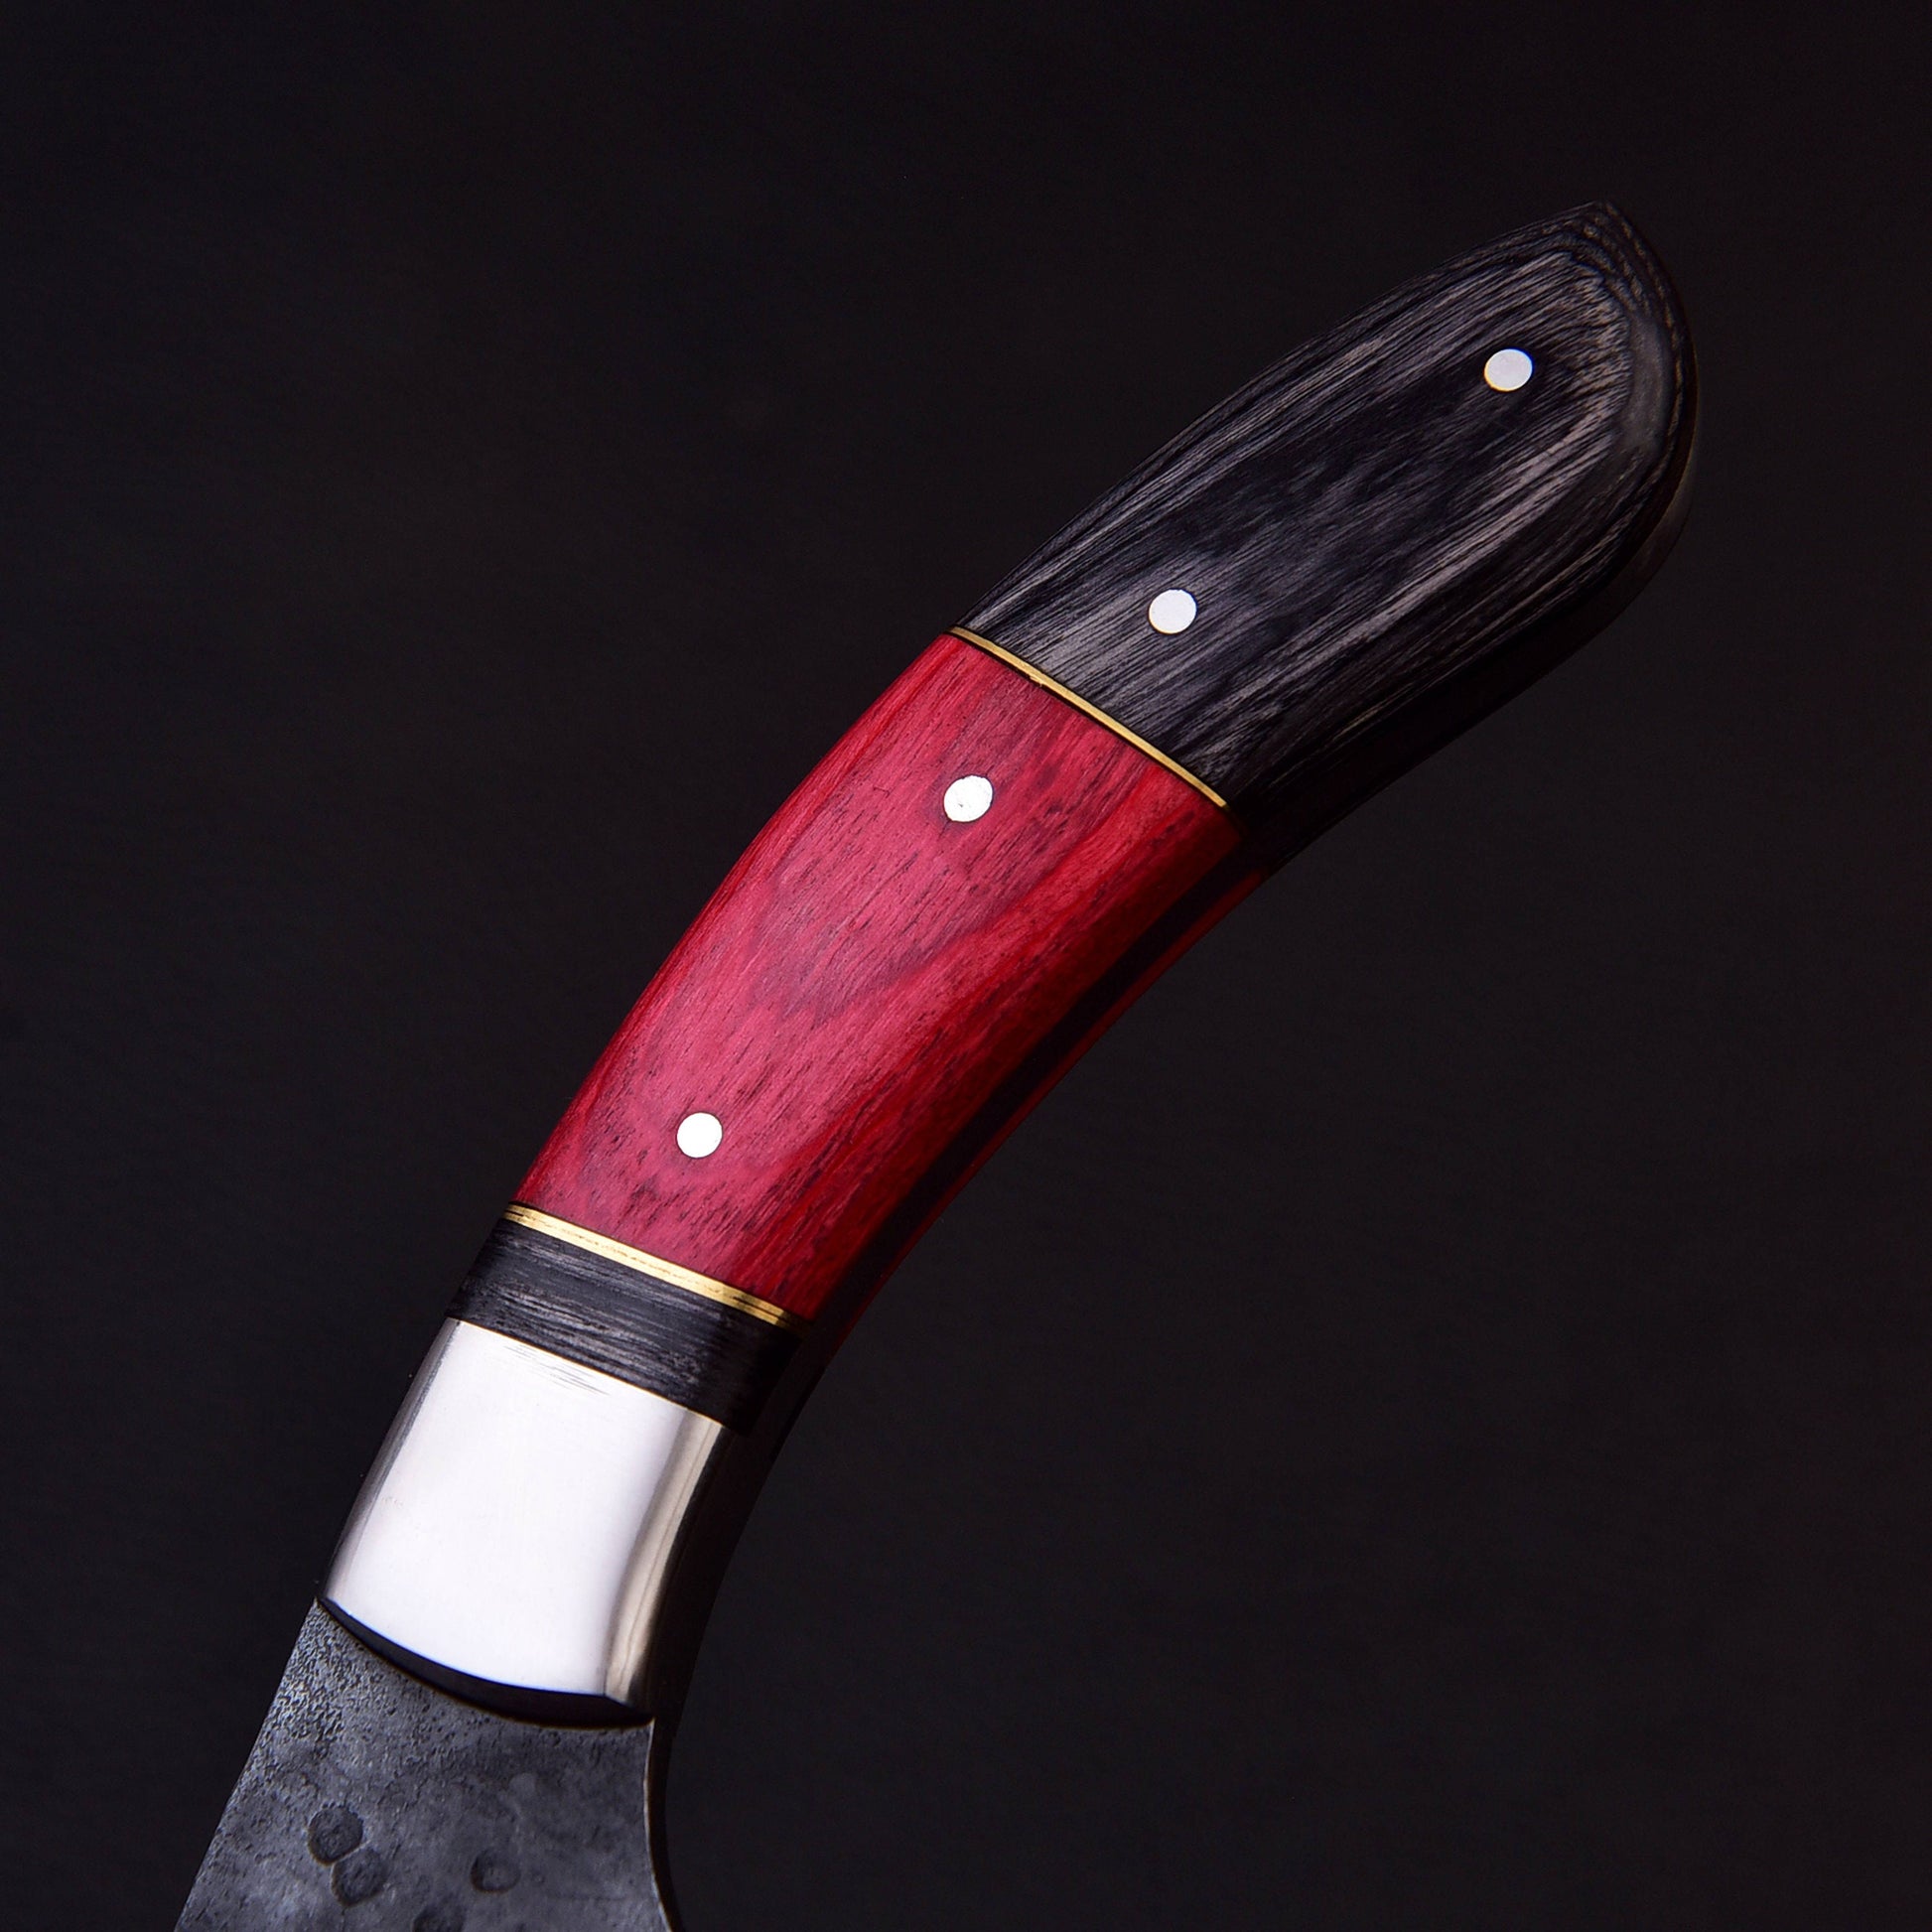 High Carbon Steel Blade Skinner Knife - 10.5" Custom Skinning Knife Full Tang Hunting Engraved Knives Gift for Him Leather Sheath Included